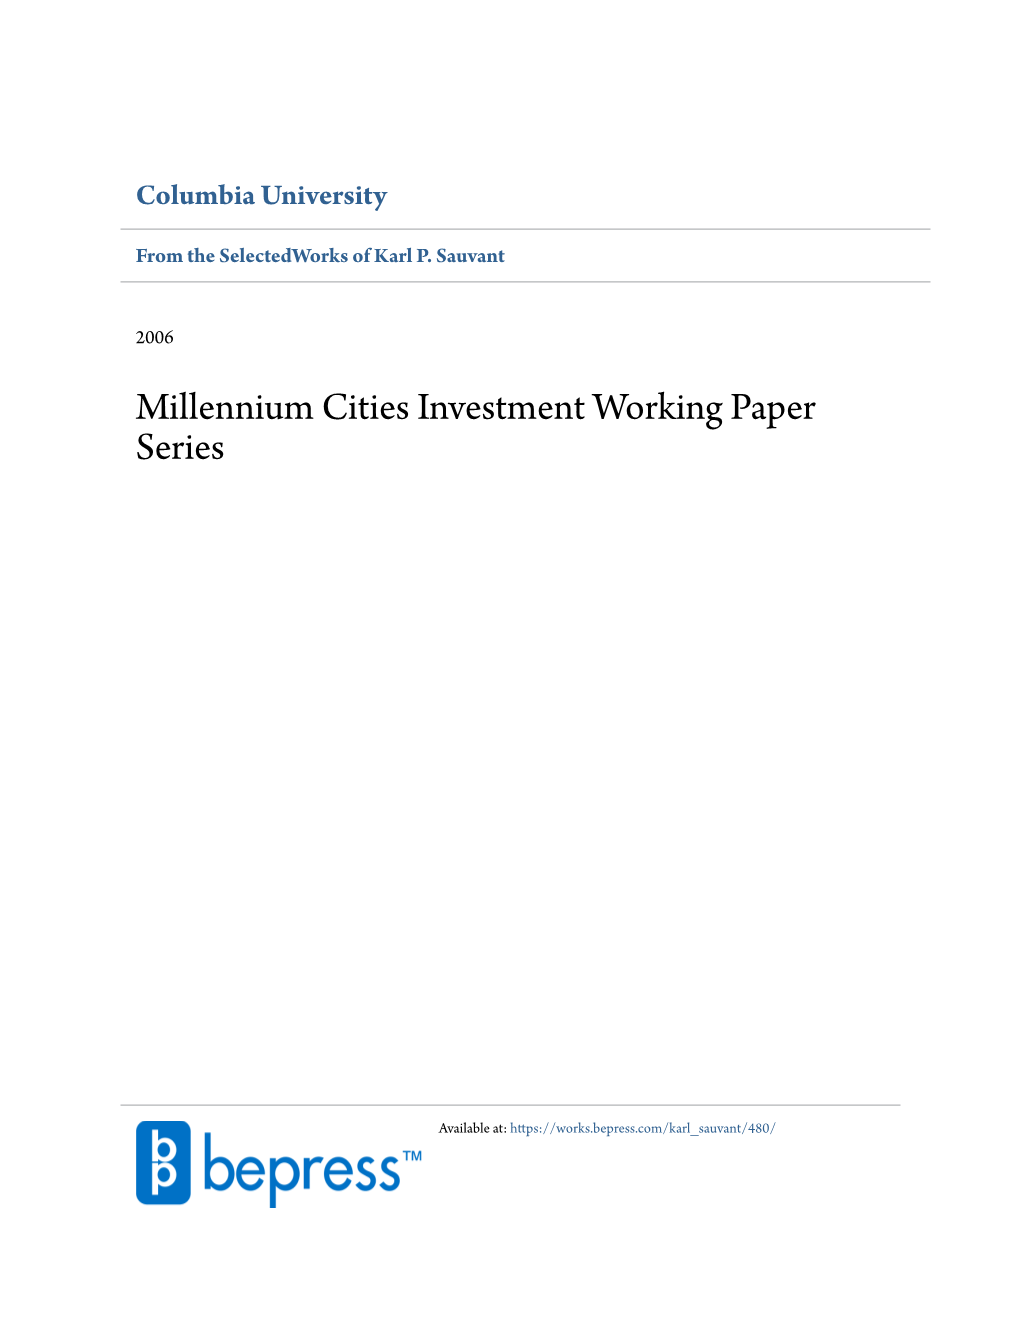 Millennium Cities Investment Working Paper Series